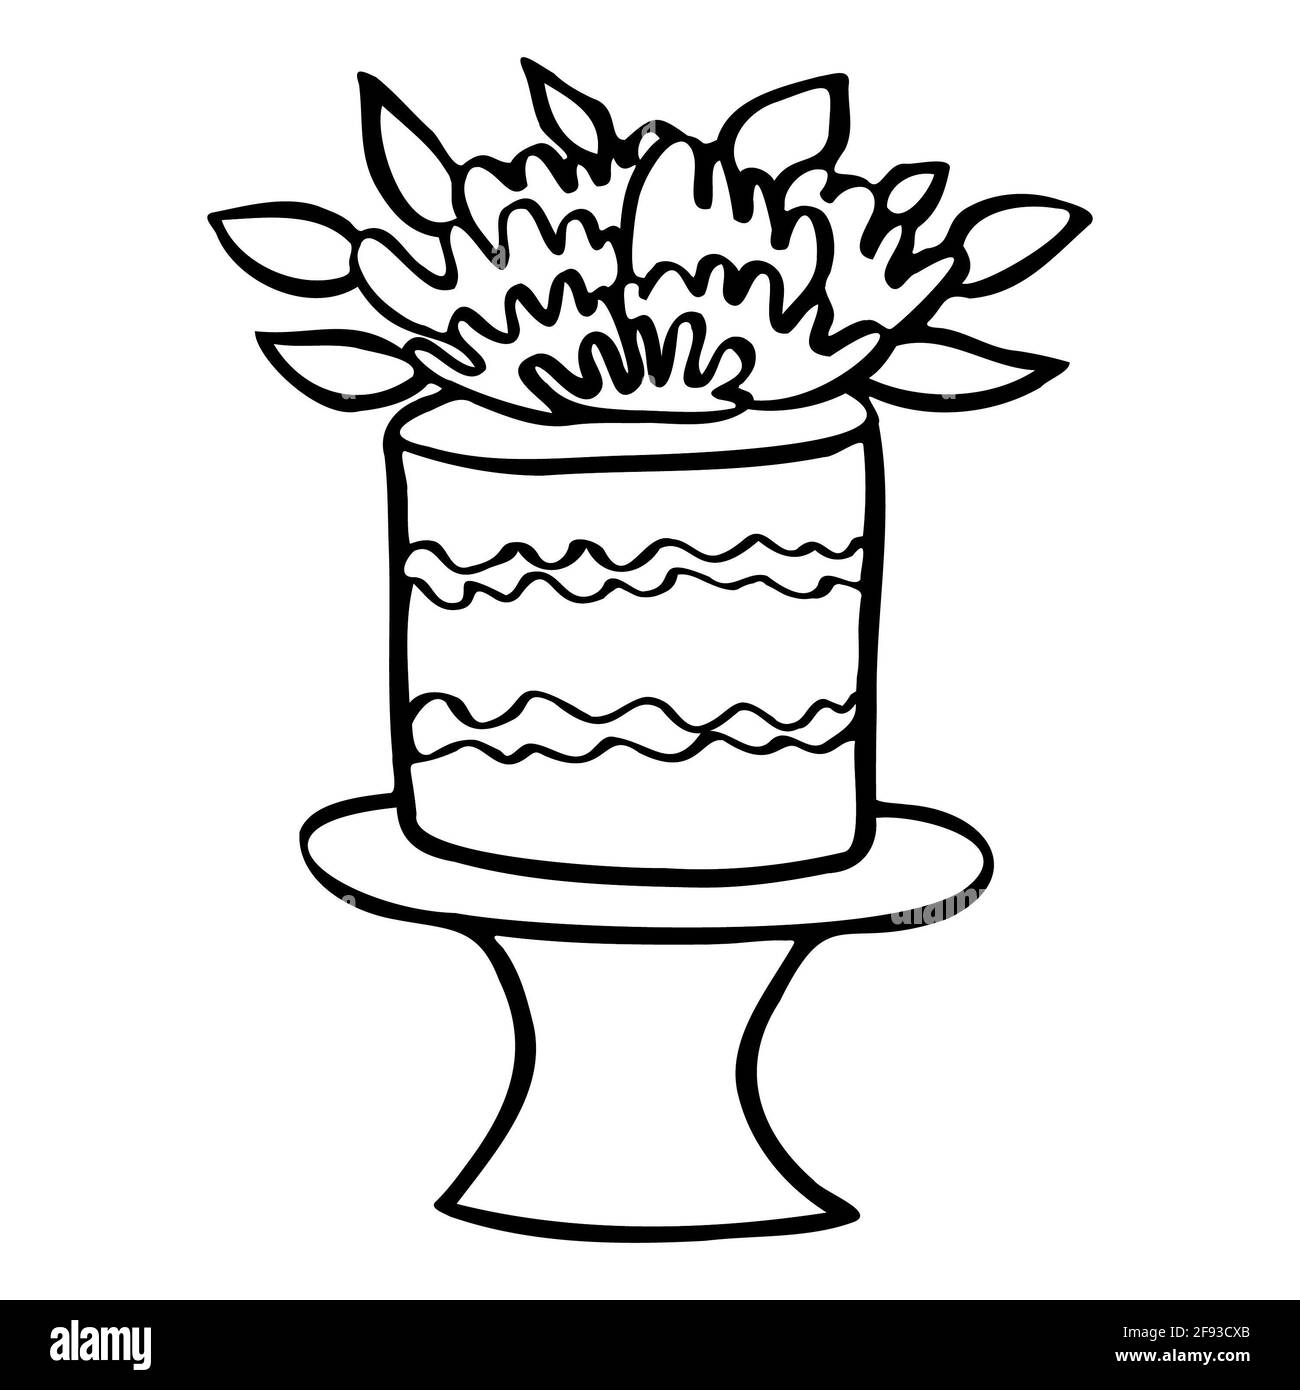 birthday cake isolated vector with cream decoration Stock Photo